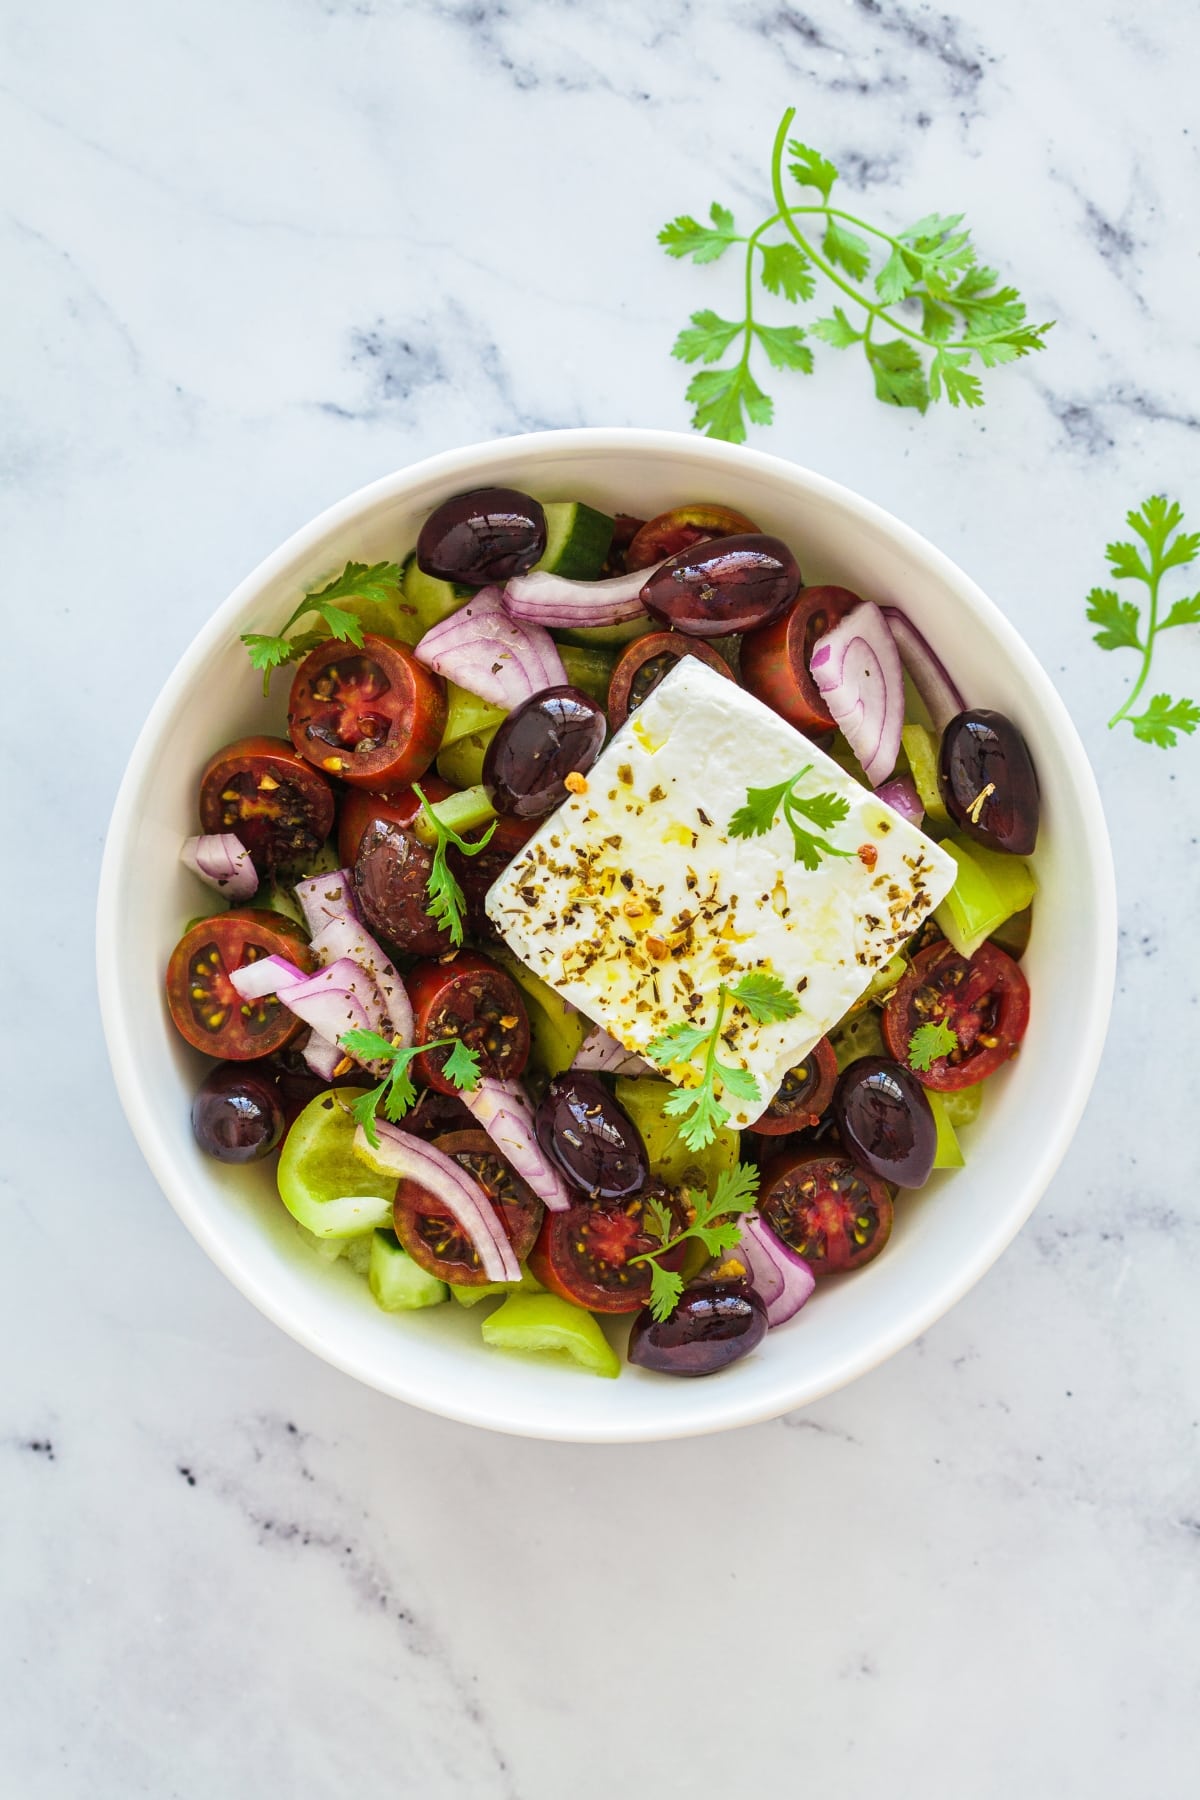 Homemade Greek Salad with Kalamata Olives, Onions and Tomatoes